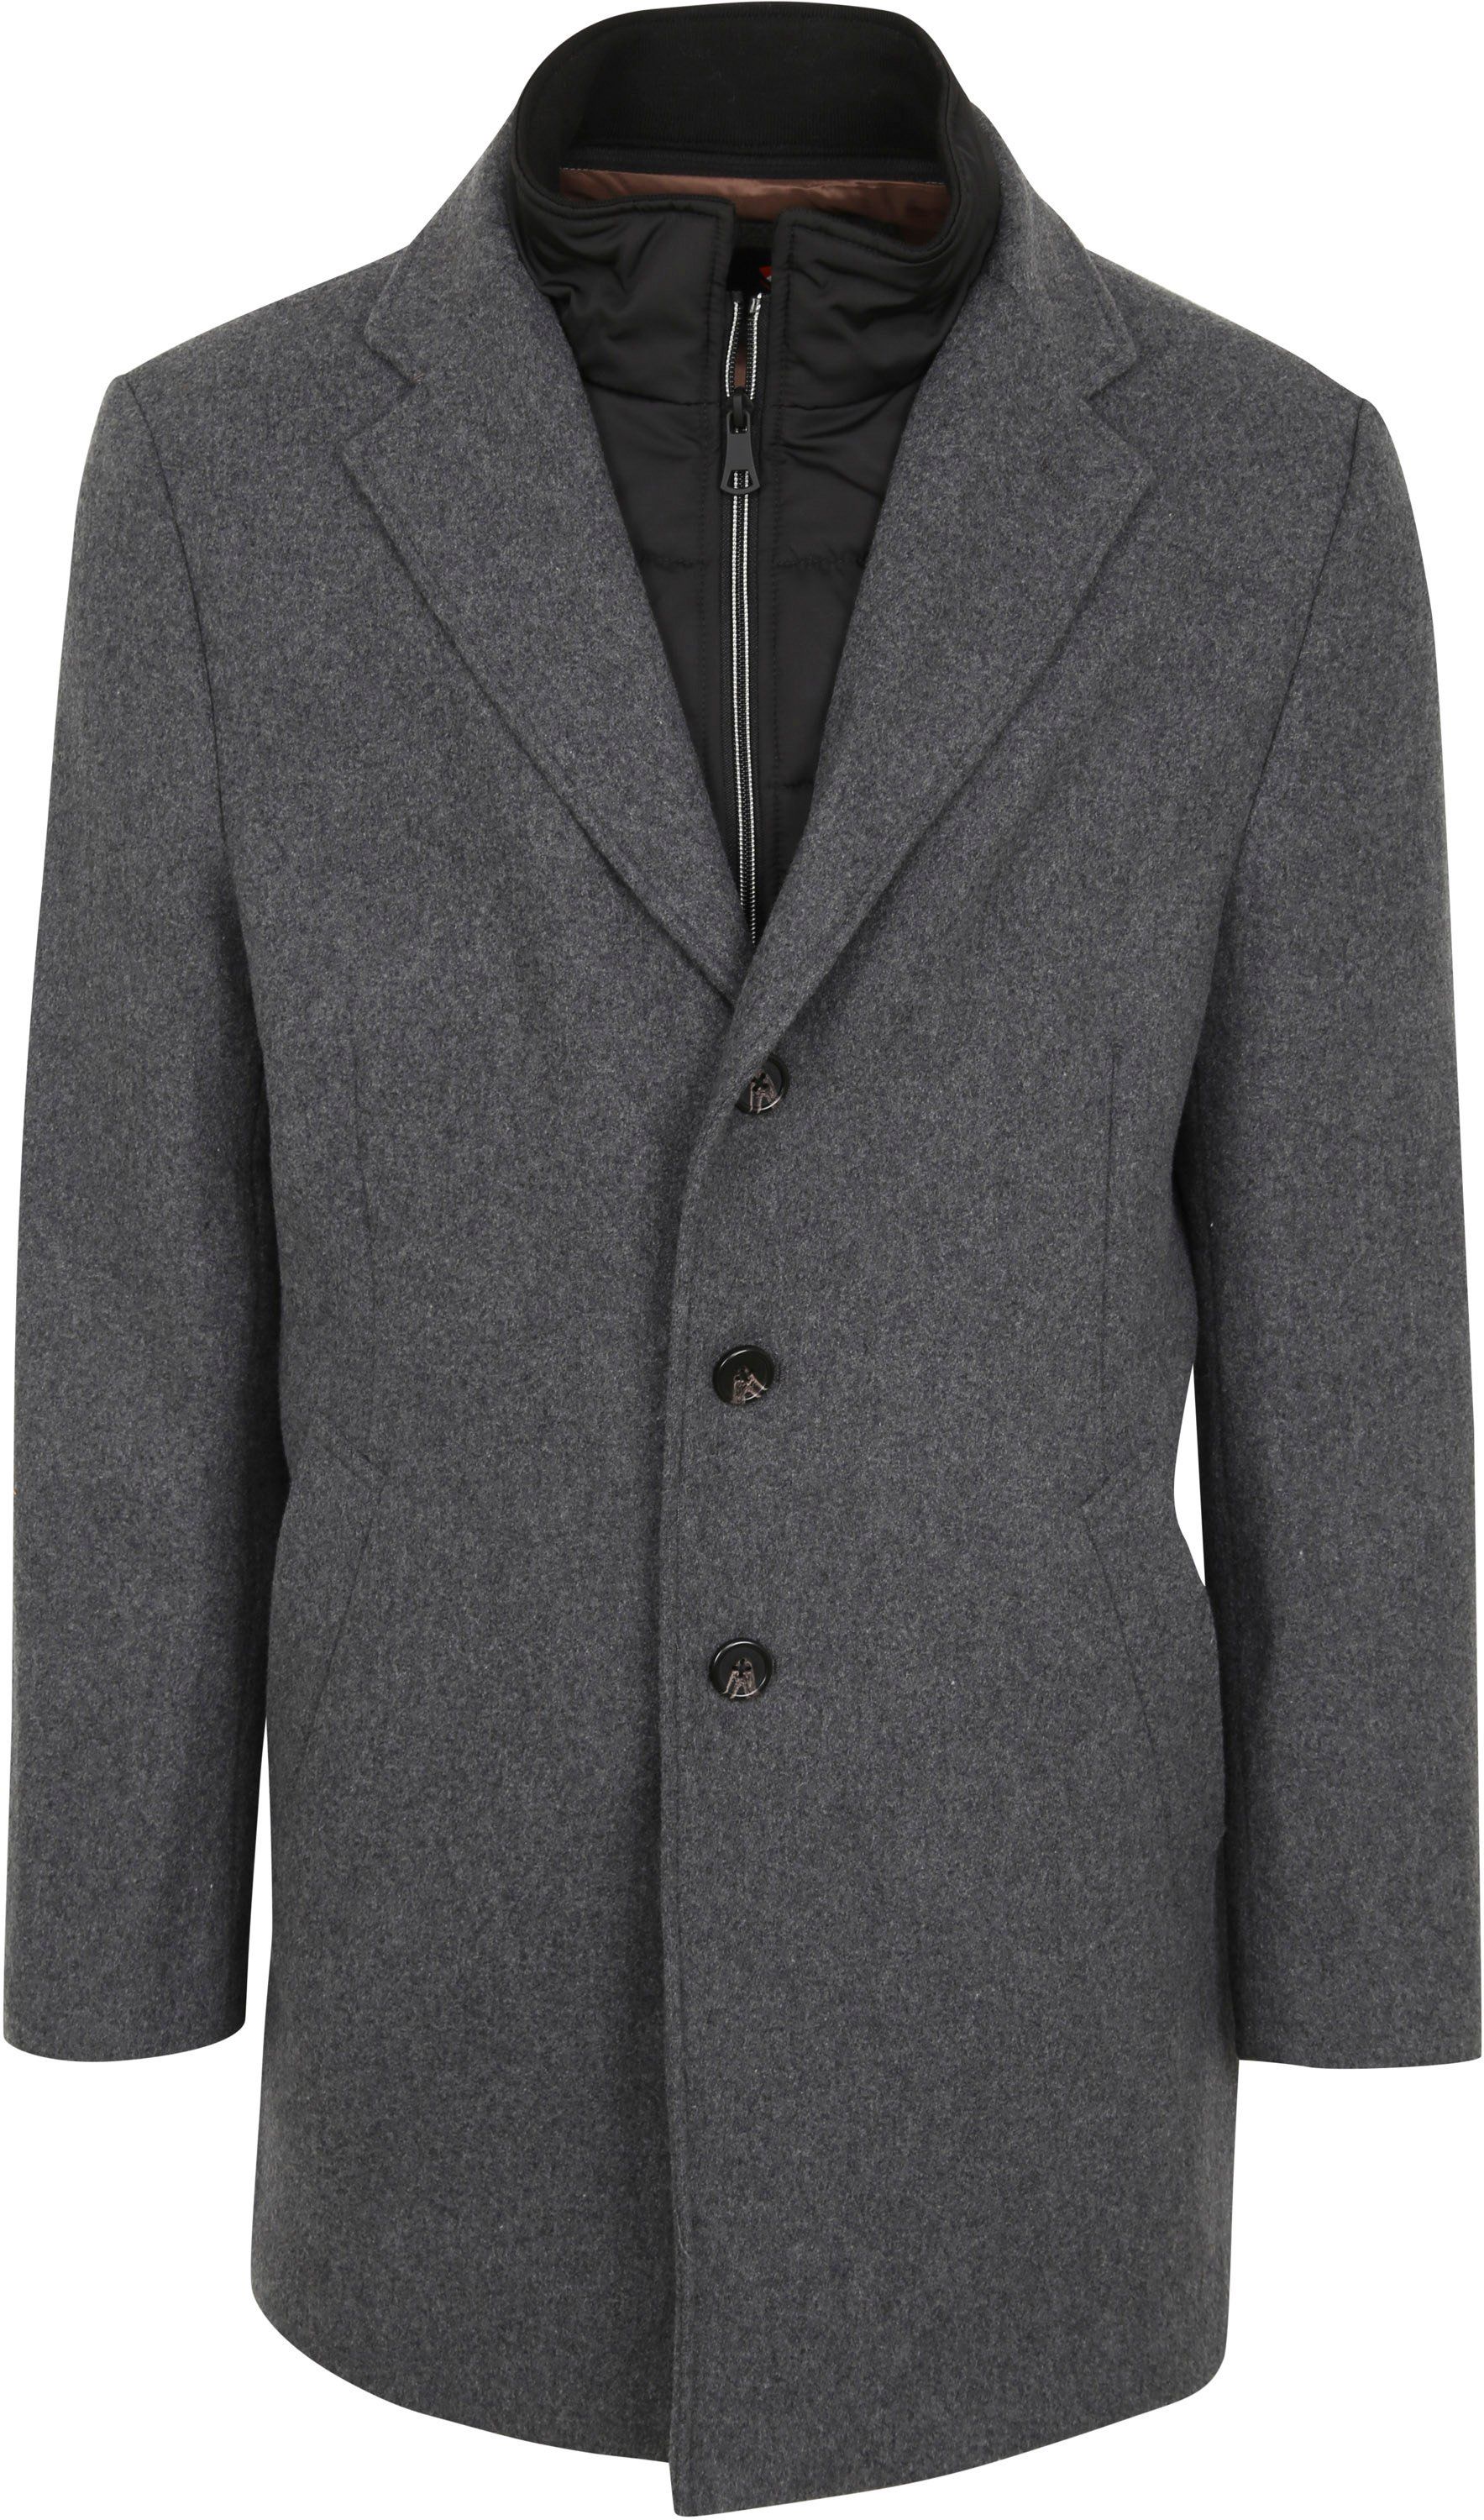 Suitable Job Coat Gray Grey size 36-R